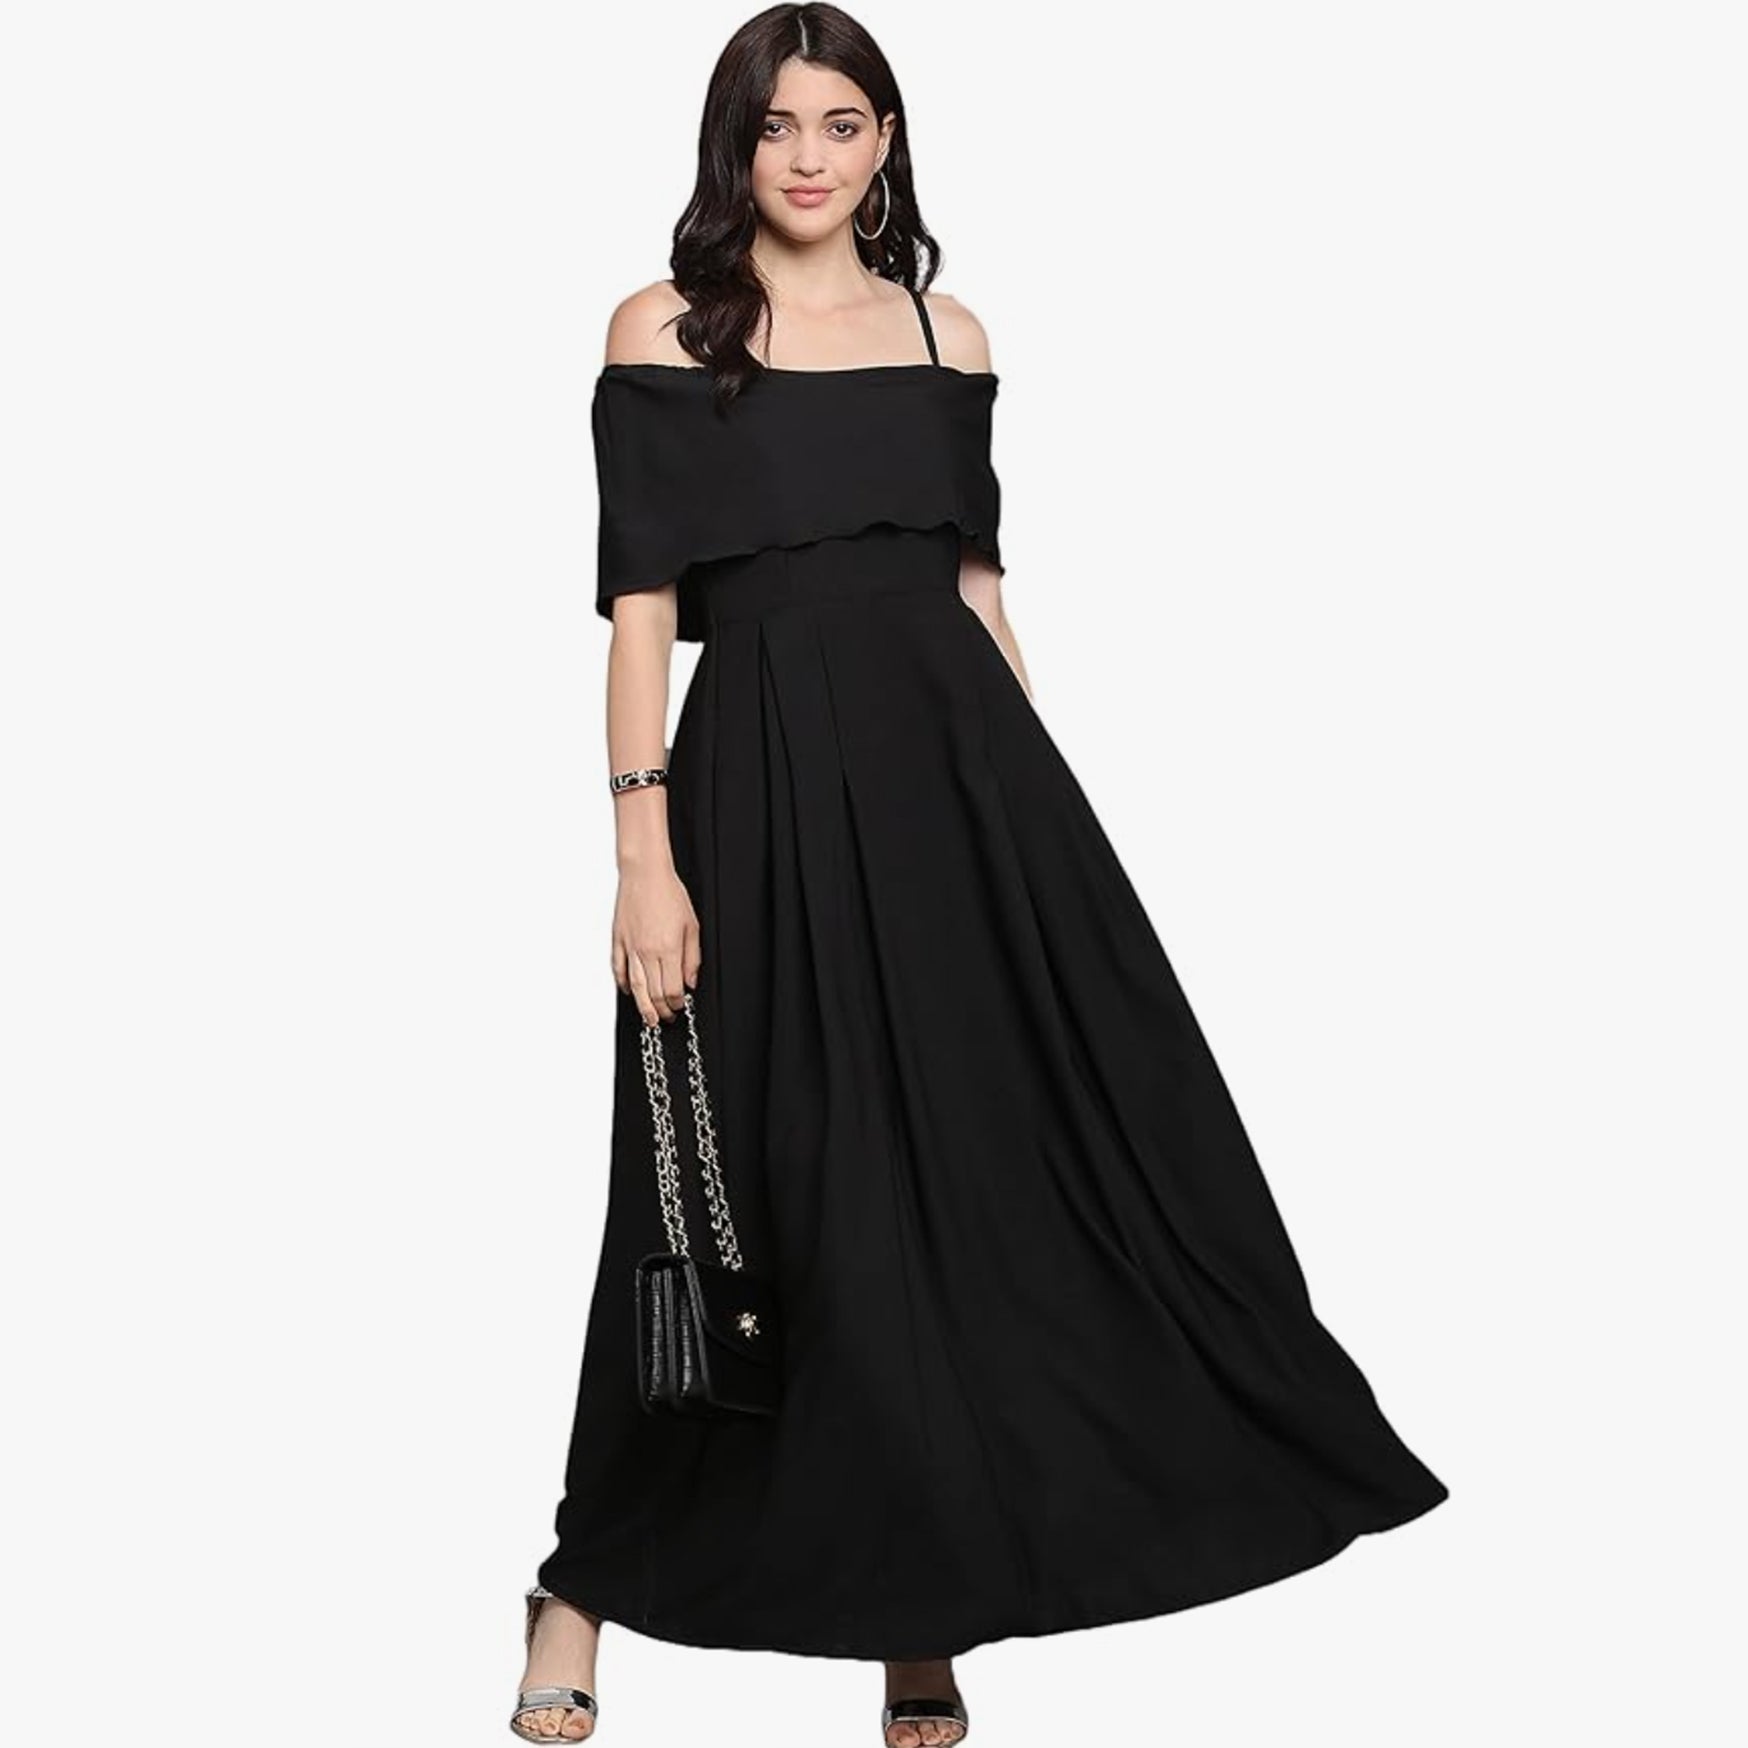 Sheetal Associates Women's Sleeveless Fit and Flare Casual Maxi Dress Black